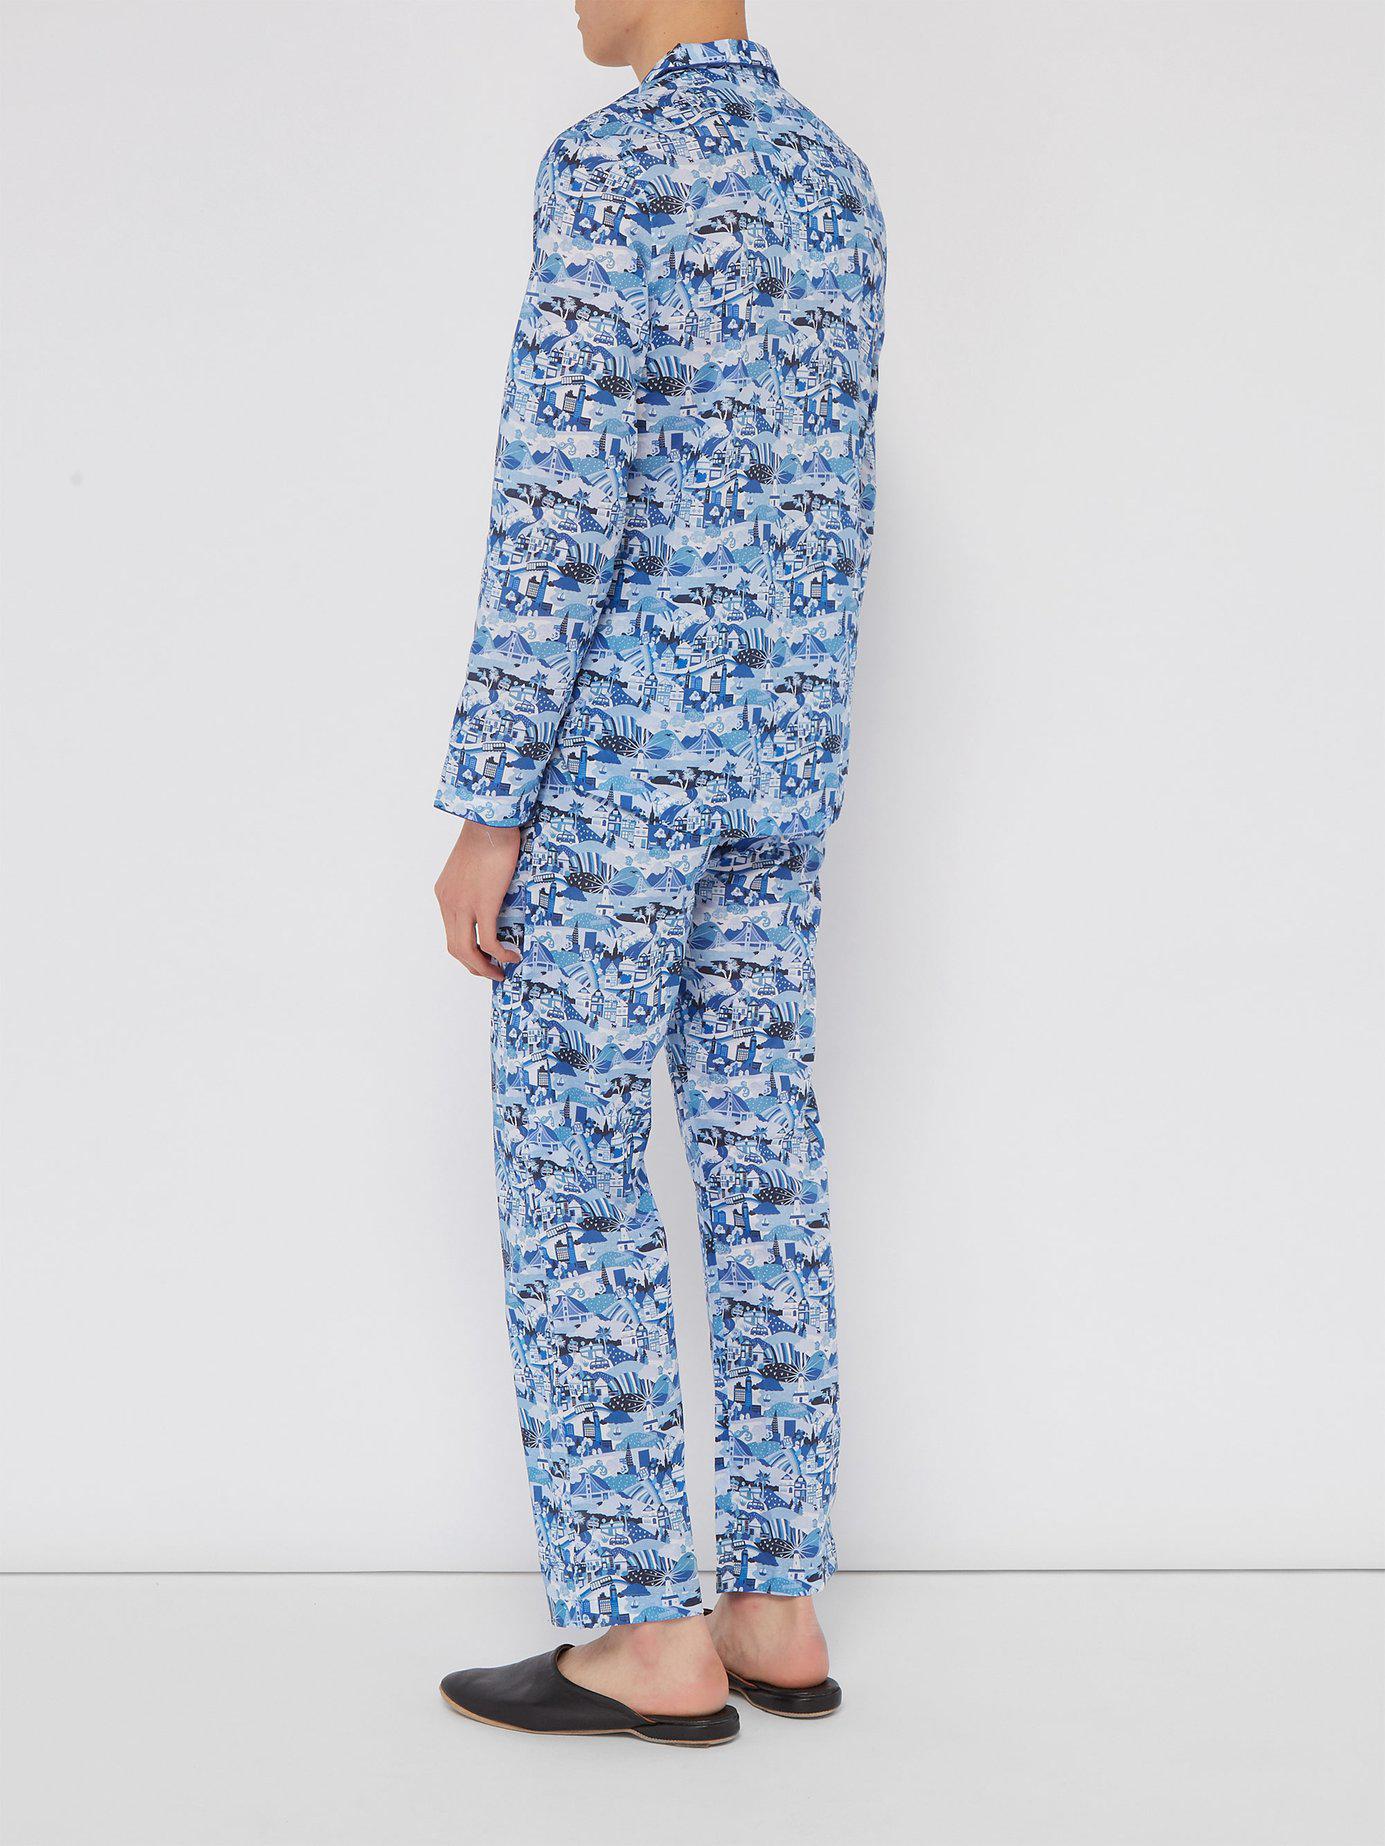 Derek Rose Modern Fit Pyjamas Ledbury 19 Cotton Batiste Blue for Men - Lyst